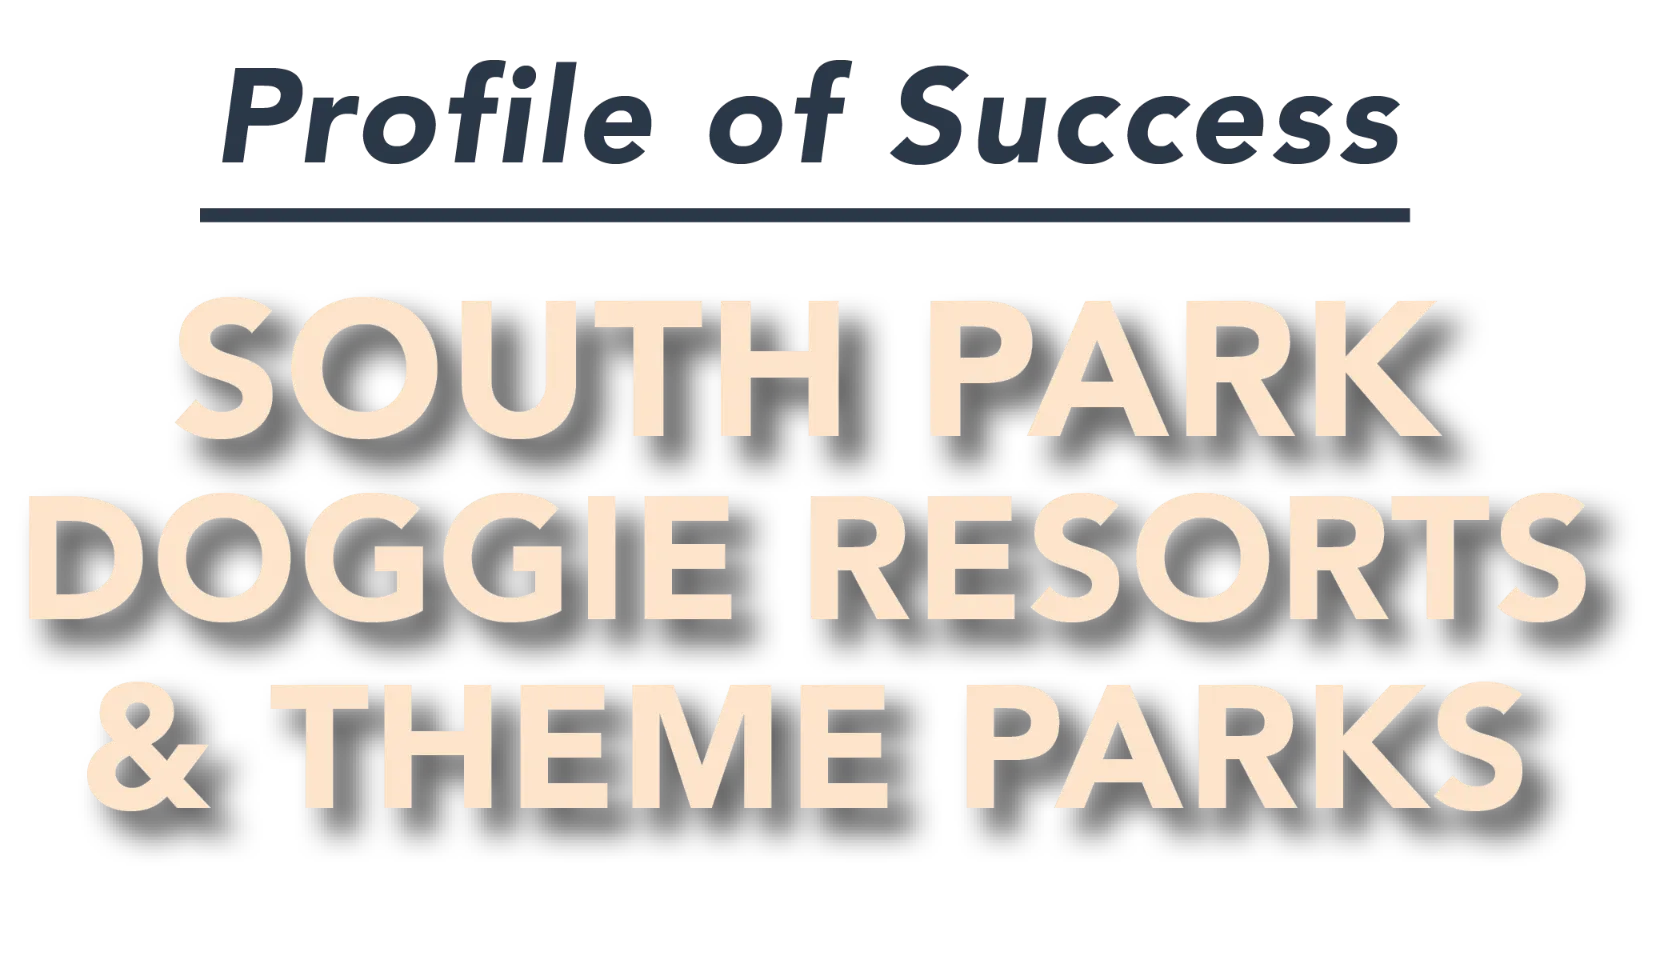 Profile of success south park doggie resorts & theme parks